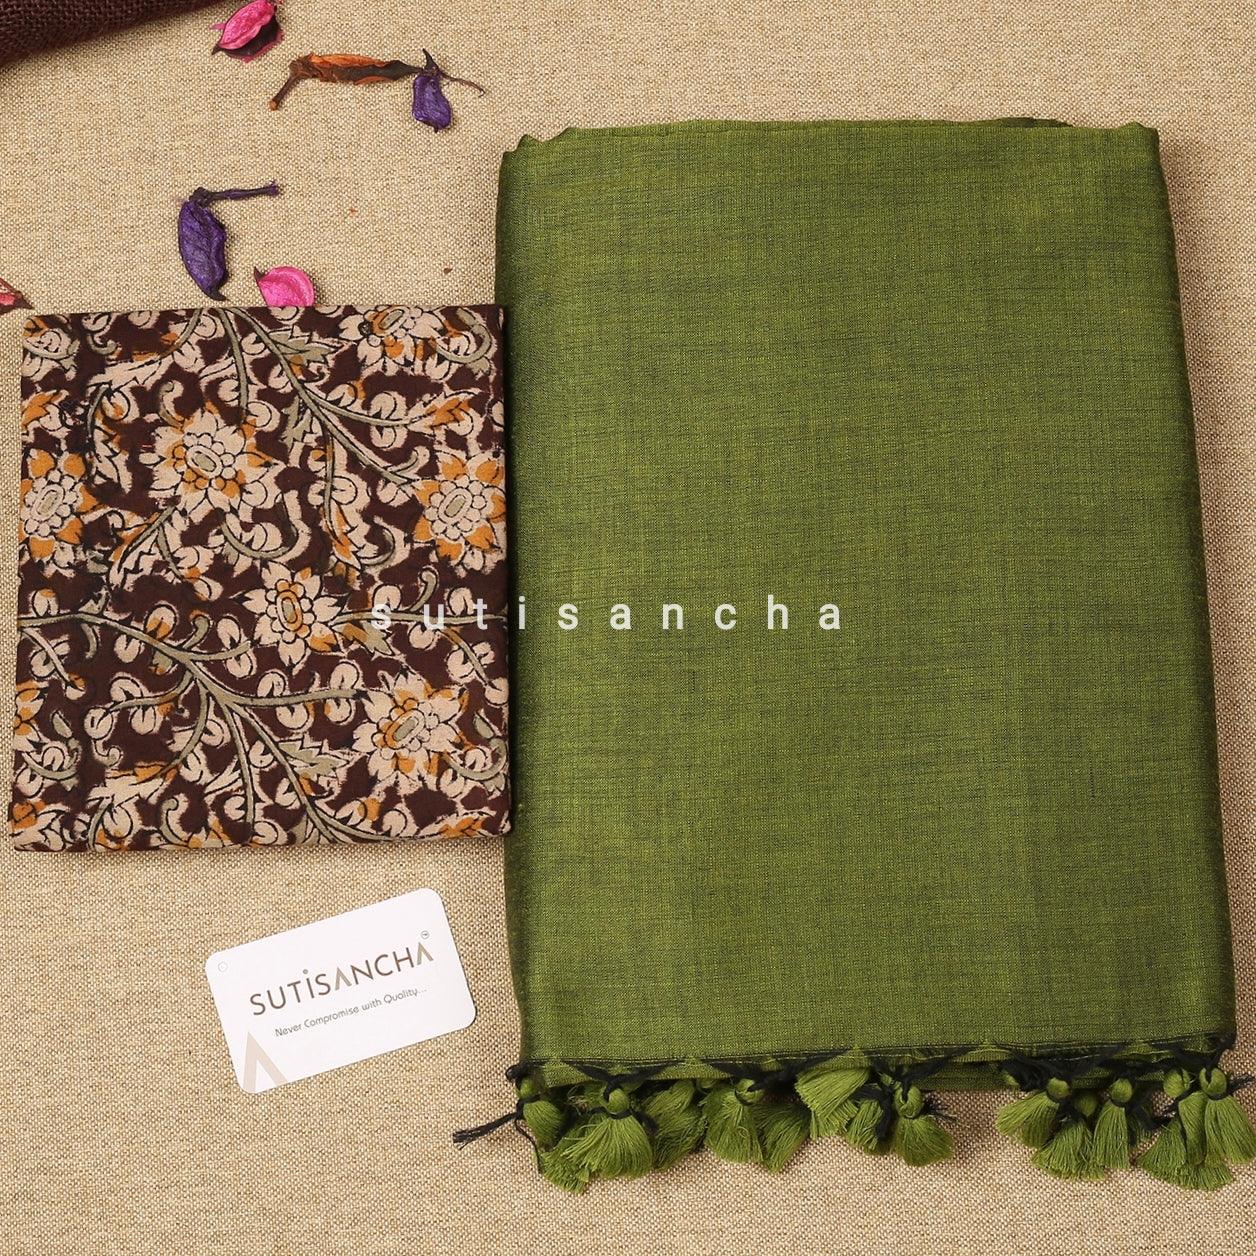 Sutisancha Mahendi Saree with Brown Cotton Blouse - Suti Sancha